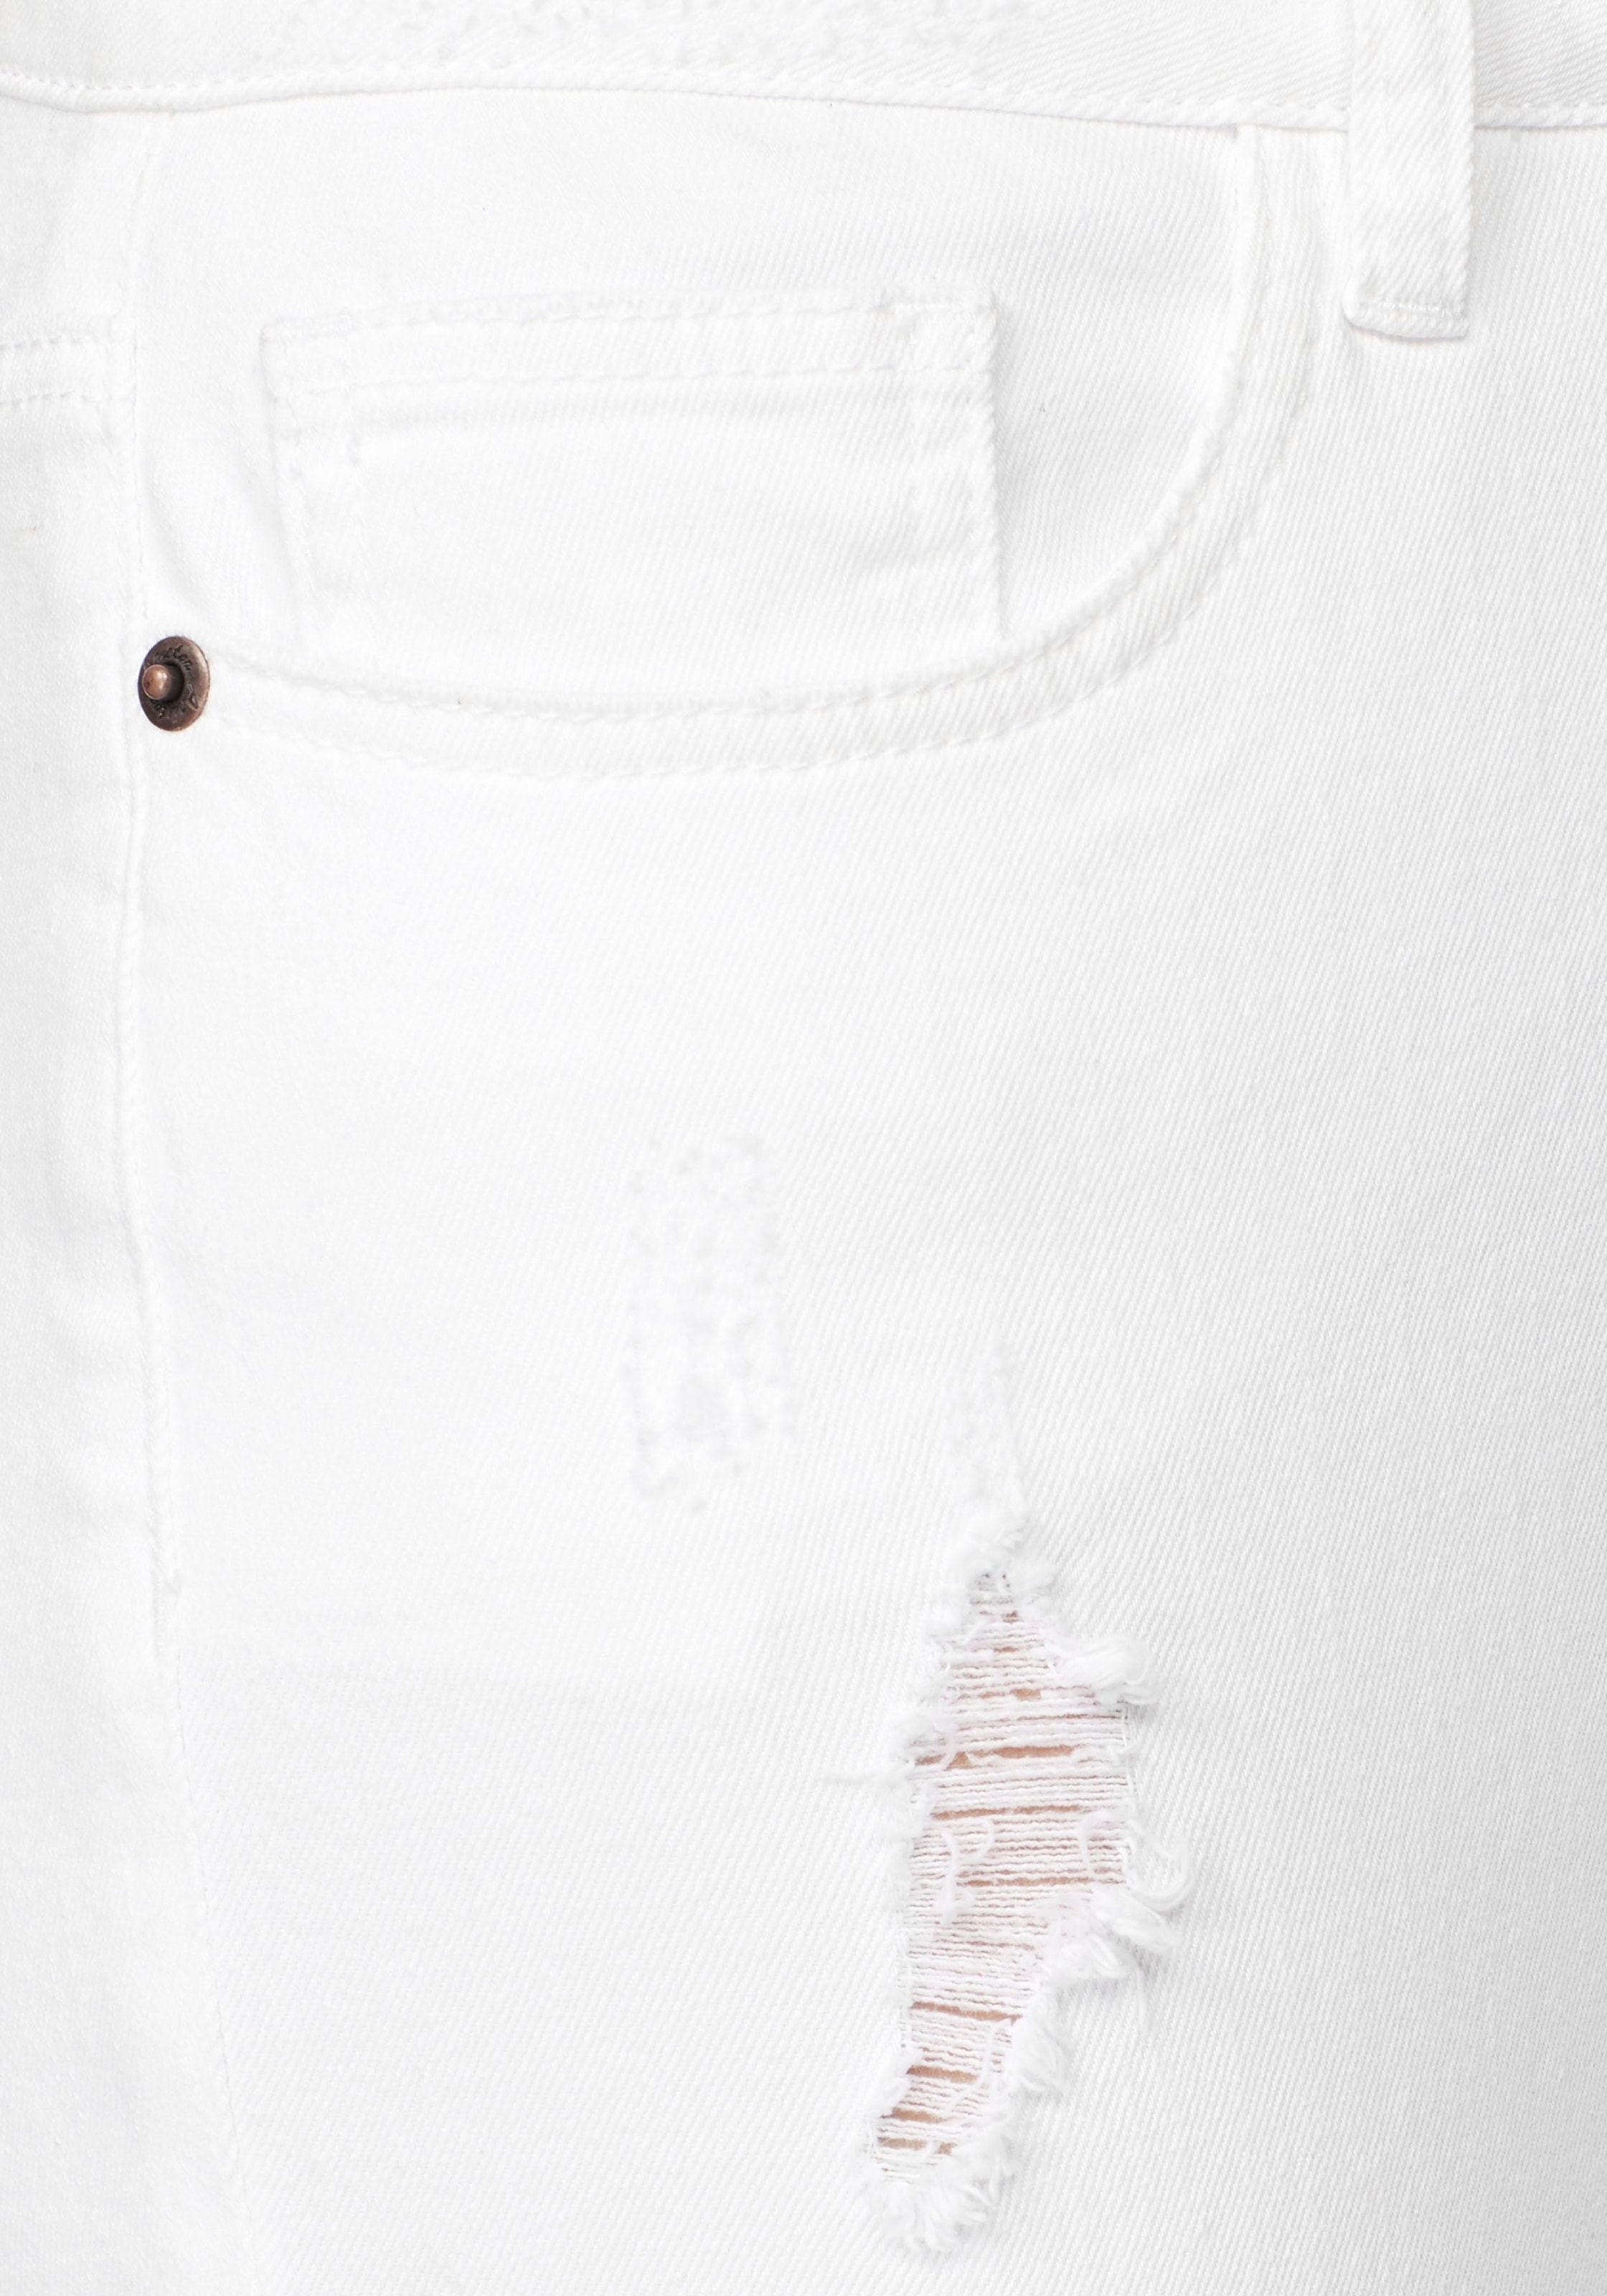 Aniston CASUAL Skinny-fit-Jeans, mit Destroyed-Effekt bei ♕